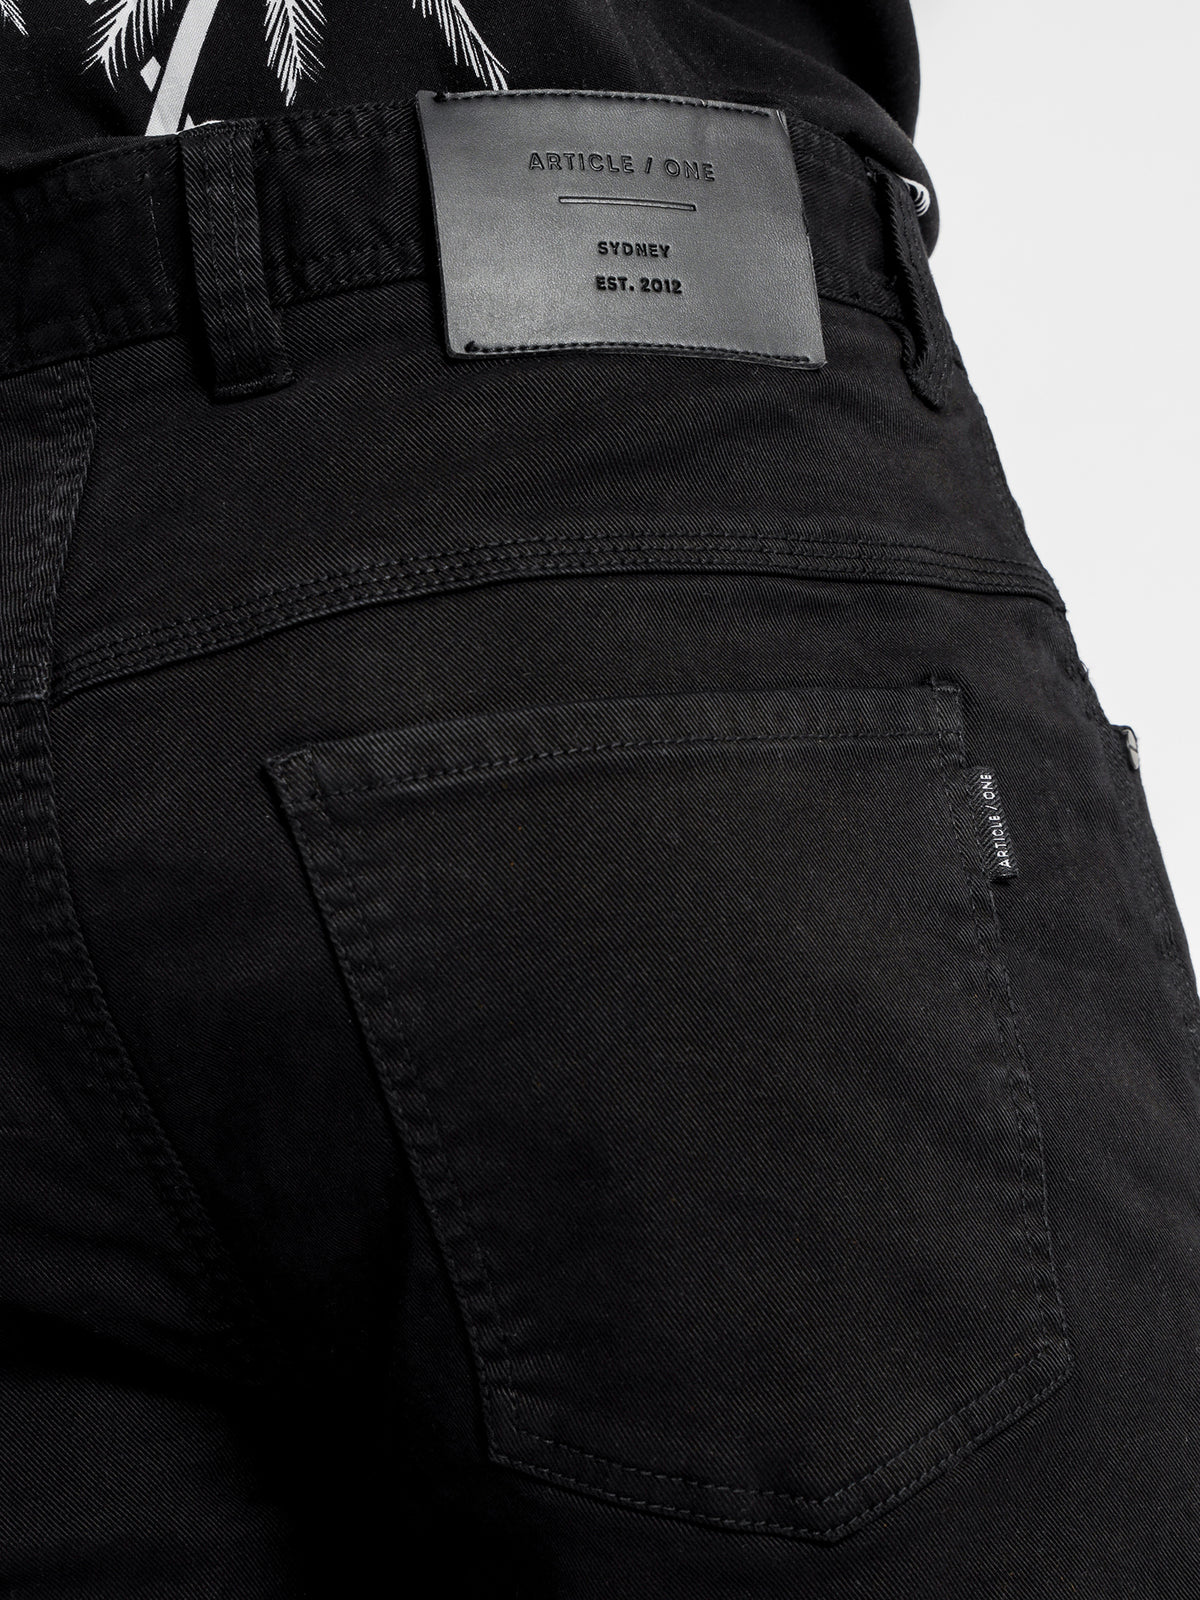 Dean 5 Pocket Shorts in Black